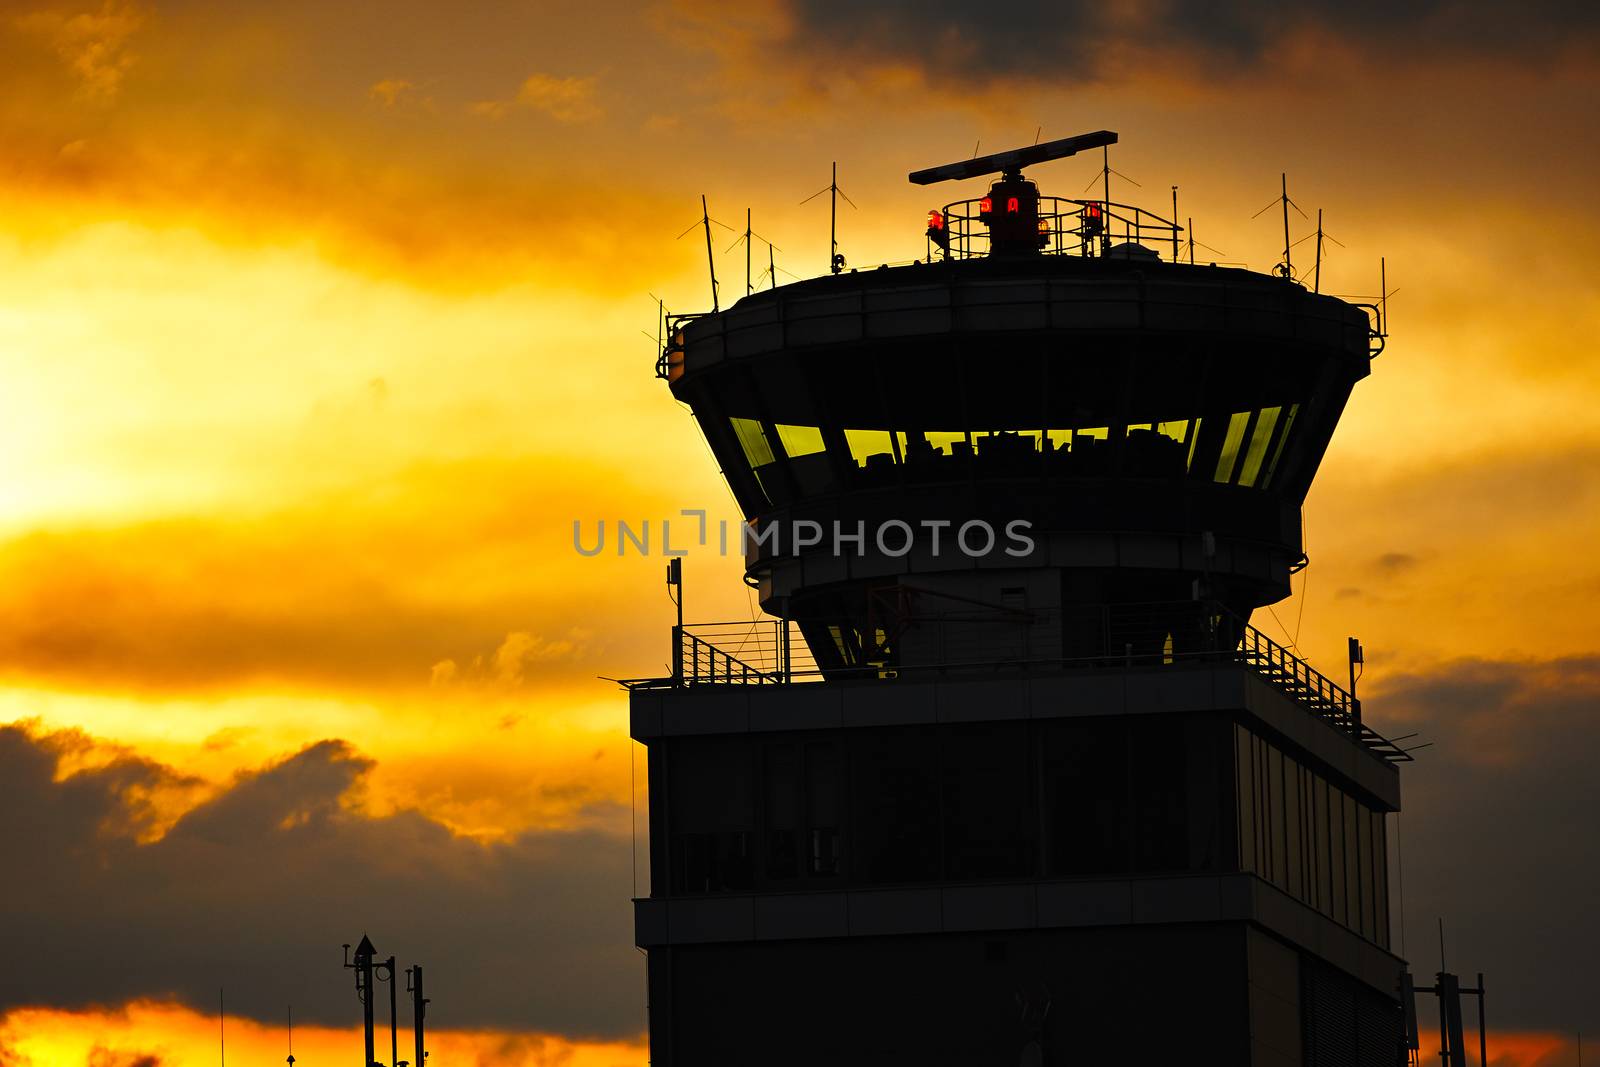 Air traffic control tower by Chalabala